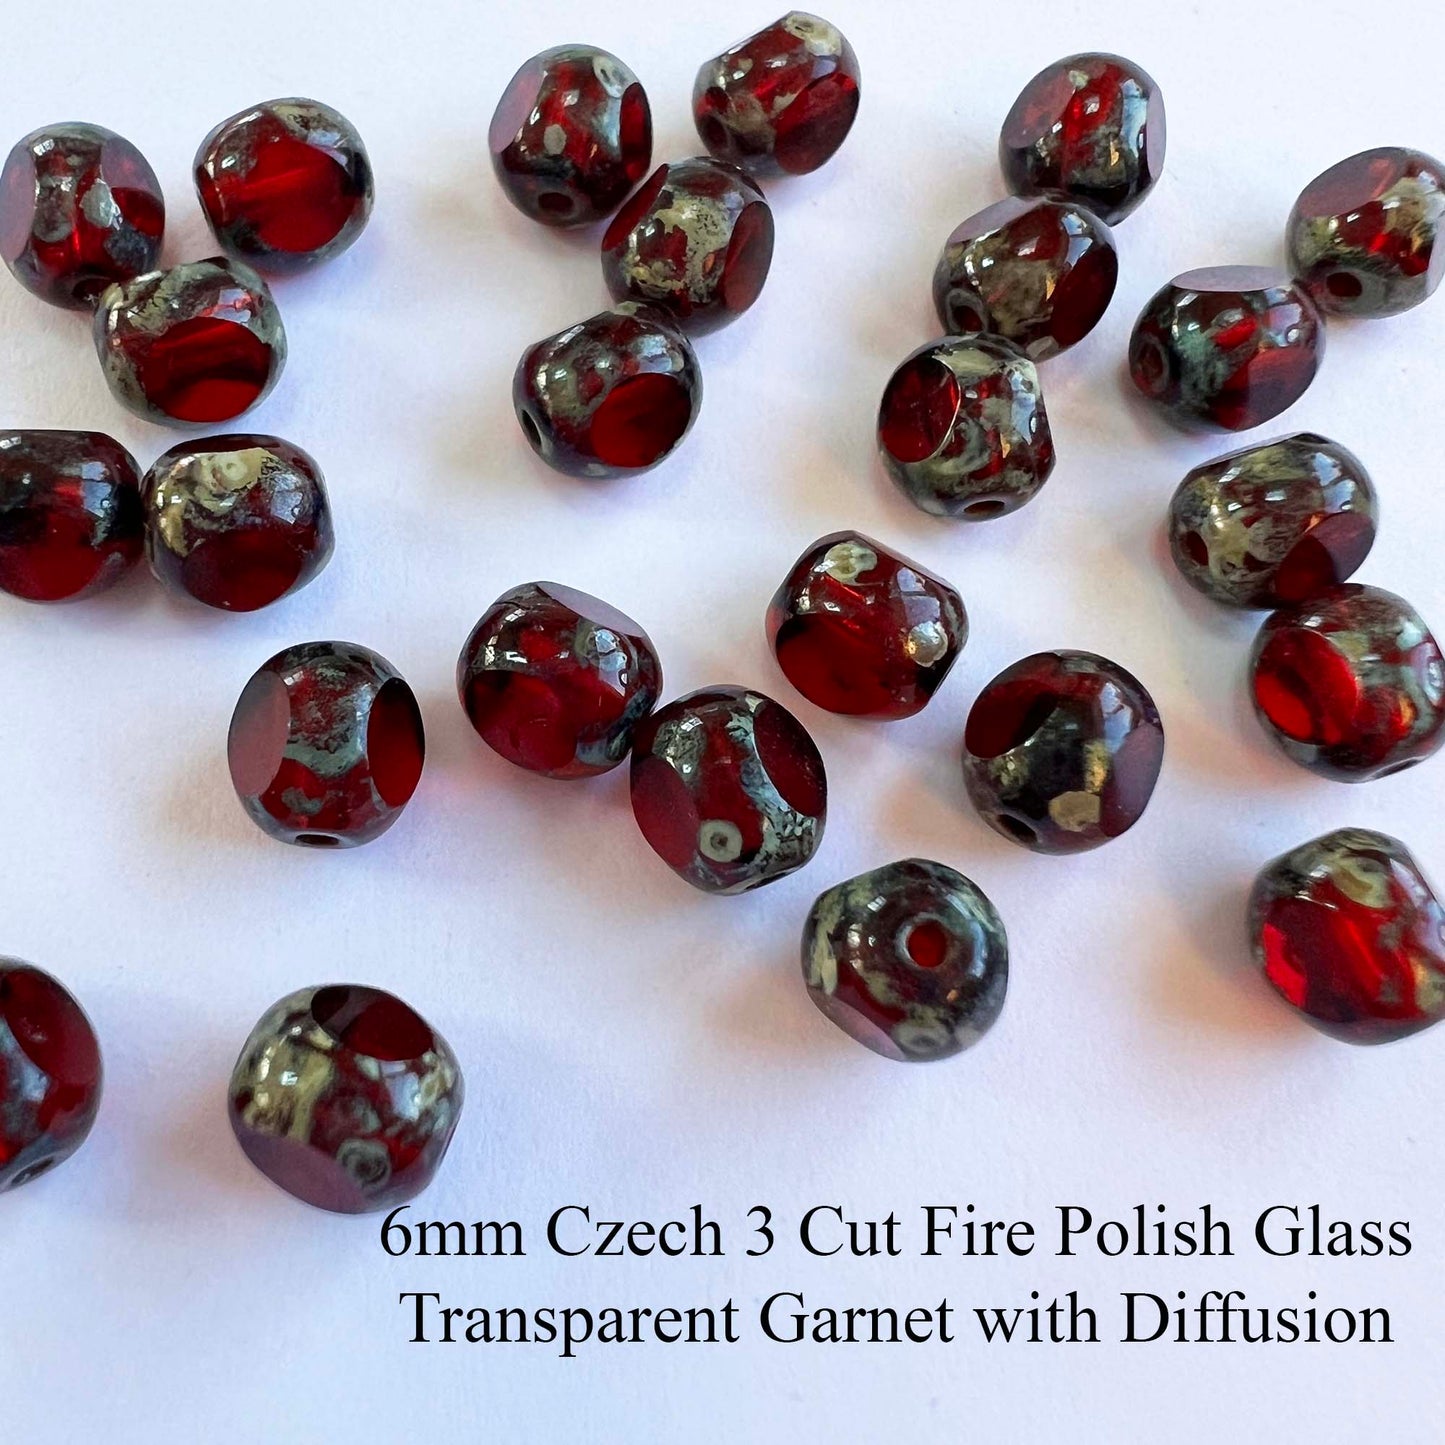 6mm Czech Fire Polish 3 Cut Transparent Garnet with Diffusion (Qty 25)